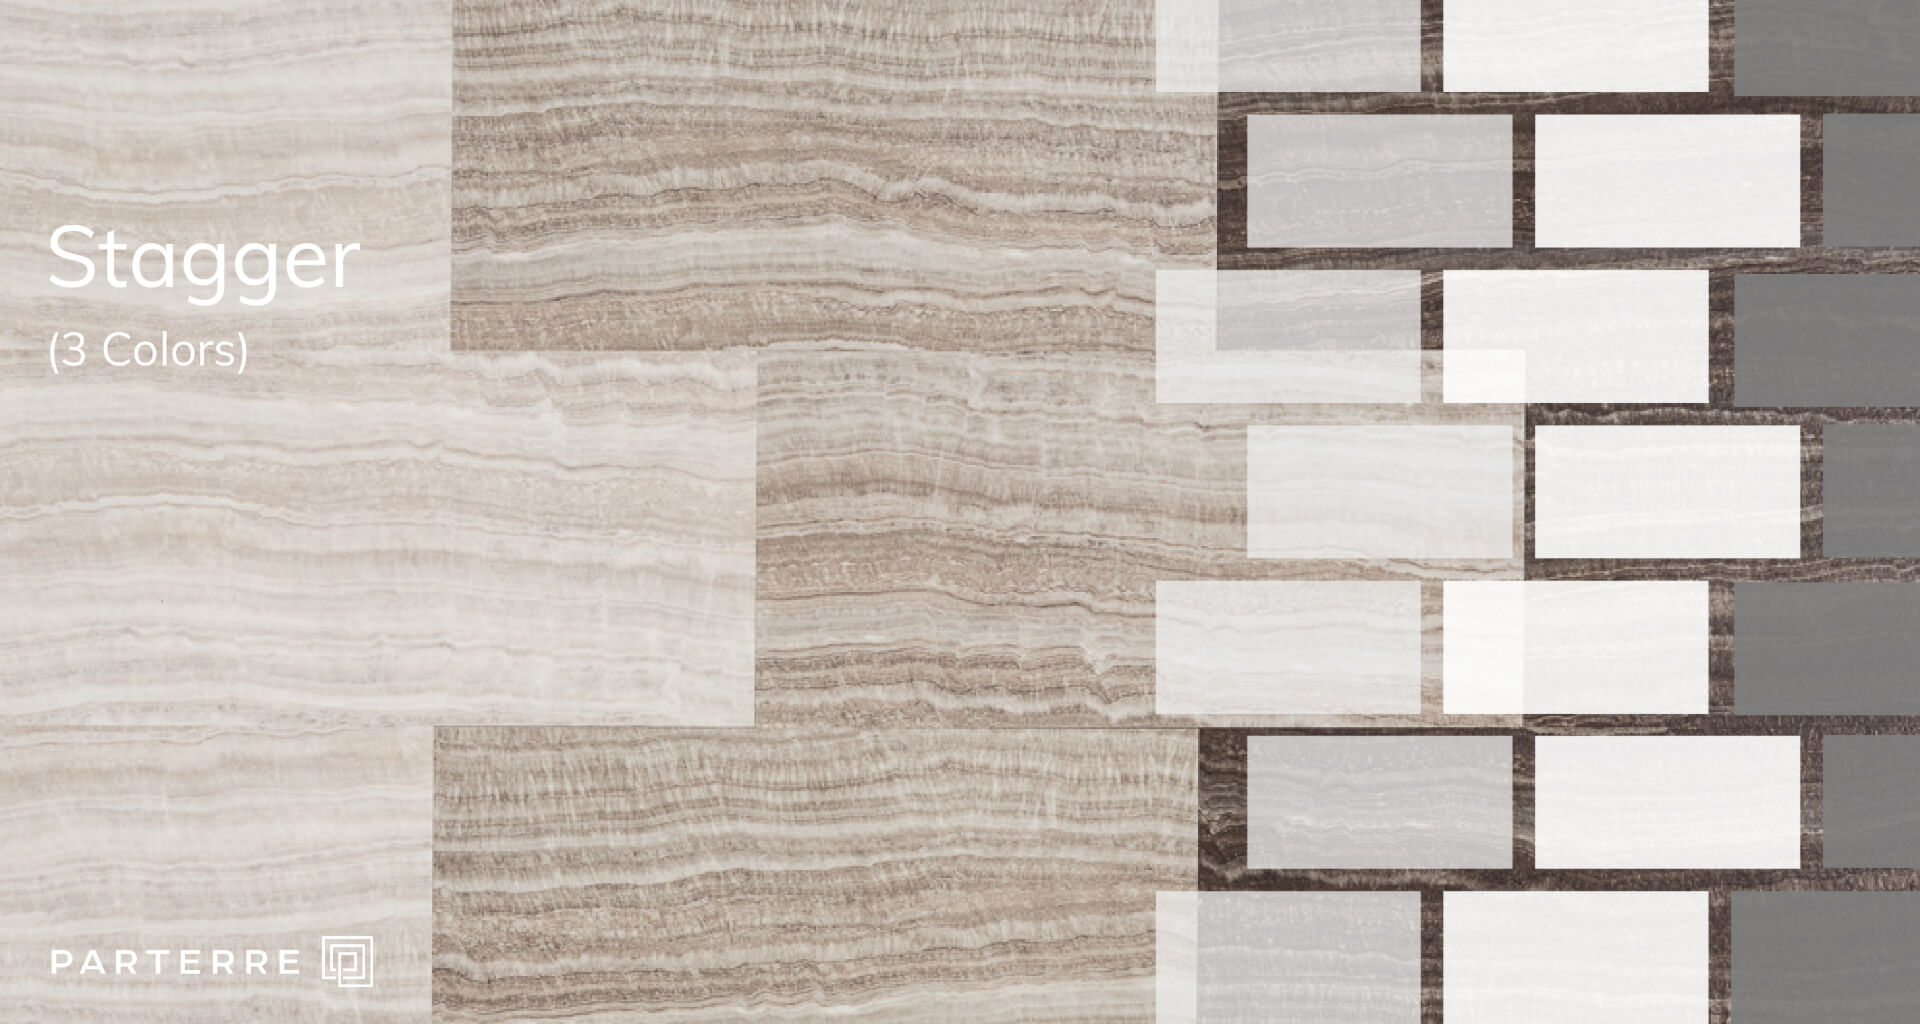 9 Vinyl Flooring Patterns For Your Next, Vinyl Sheet Flooring Tile Pattern